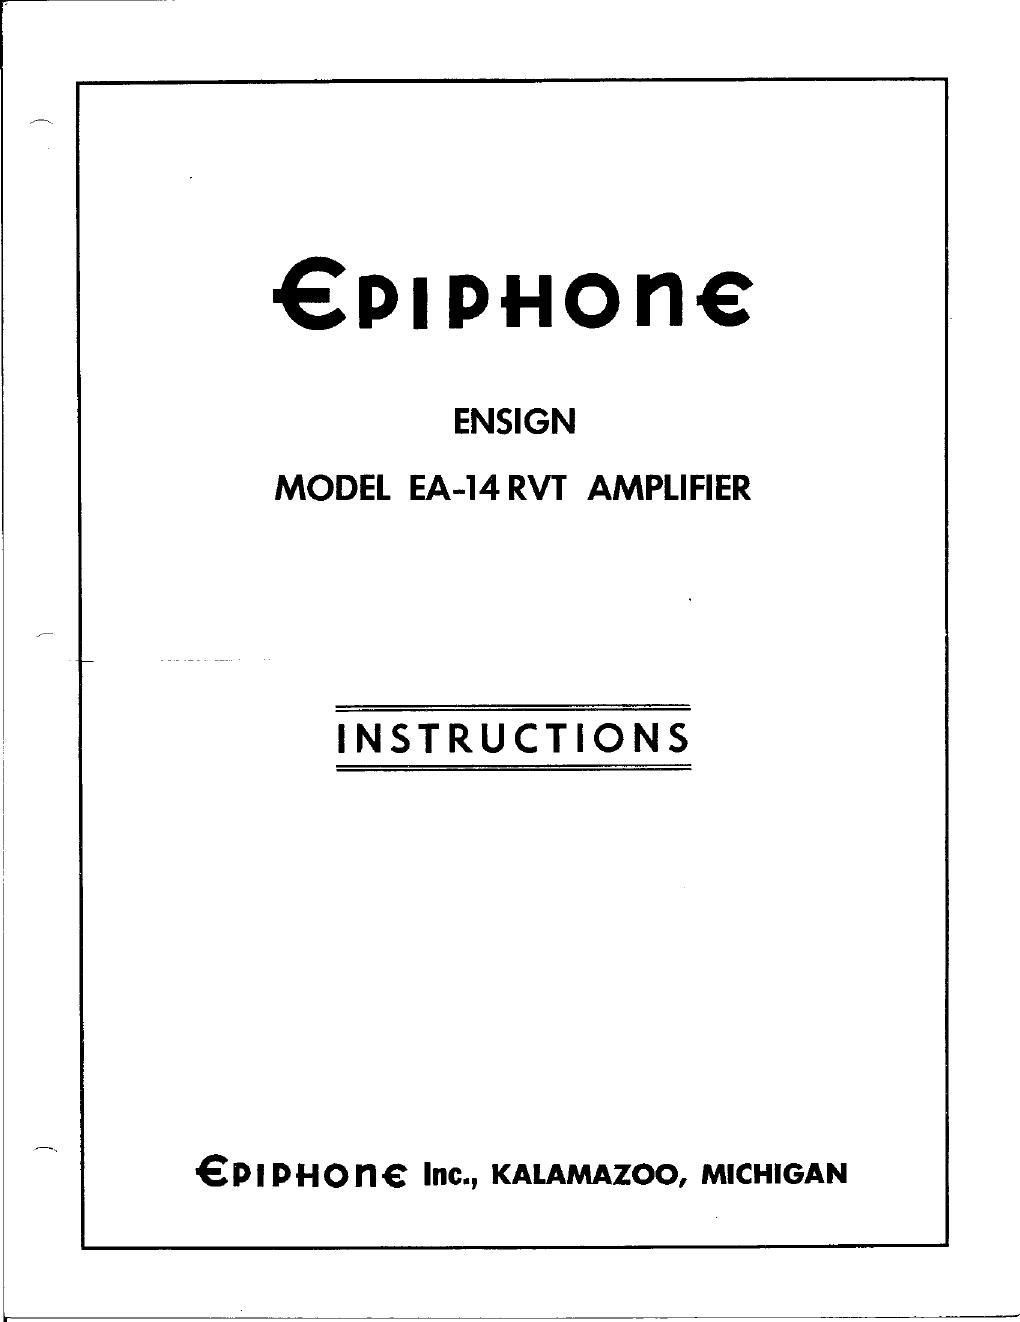 epiphone ea 14rvt ensign schematic